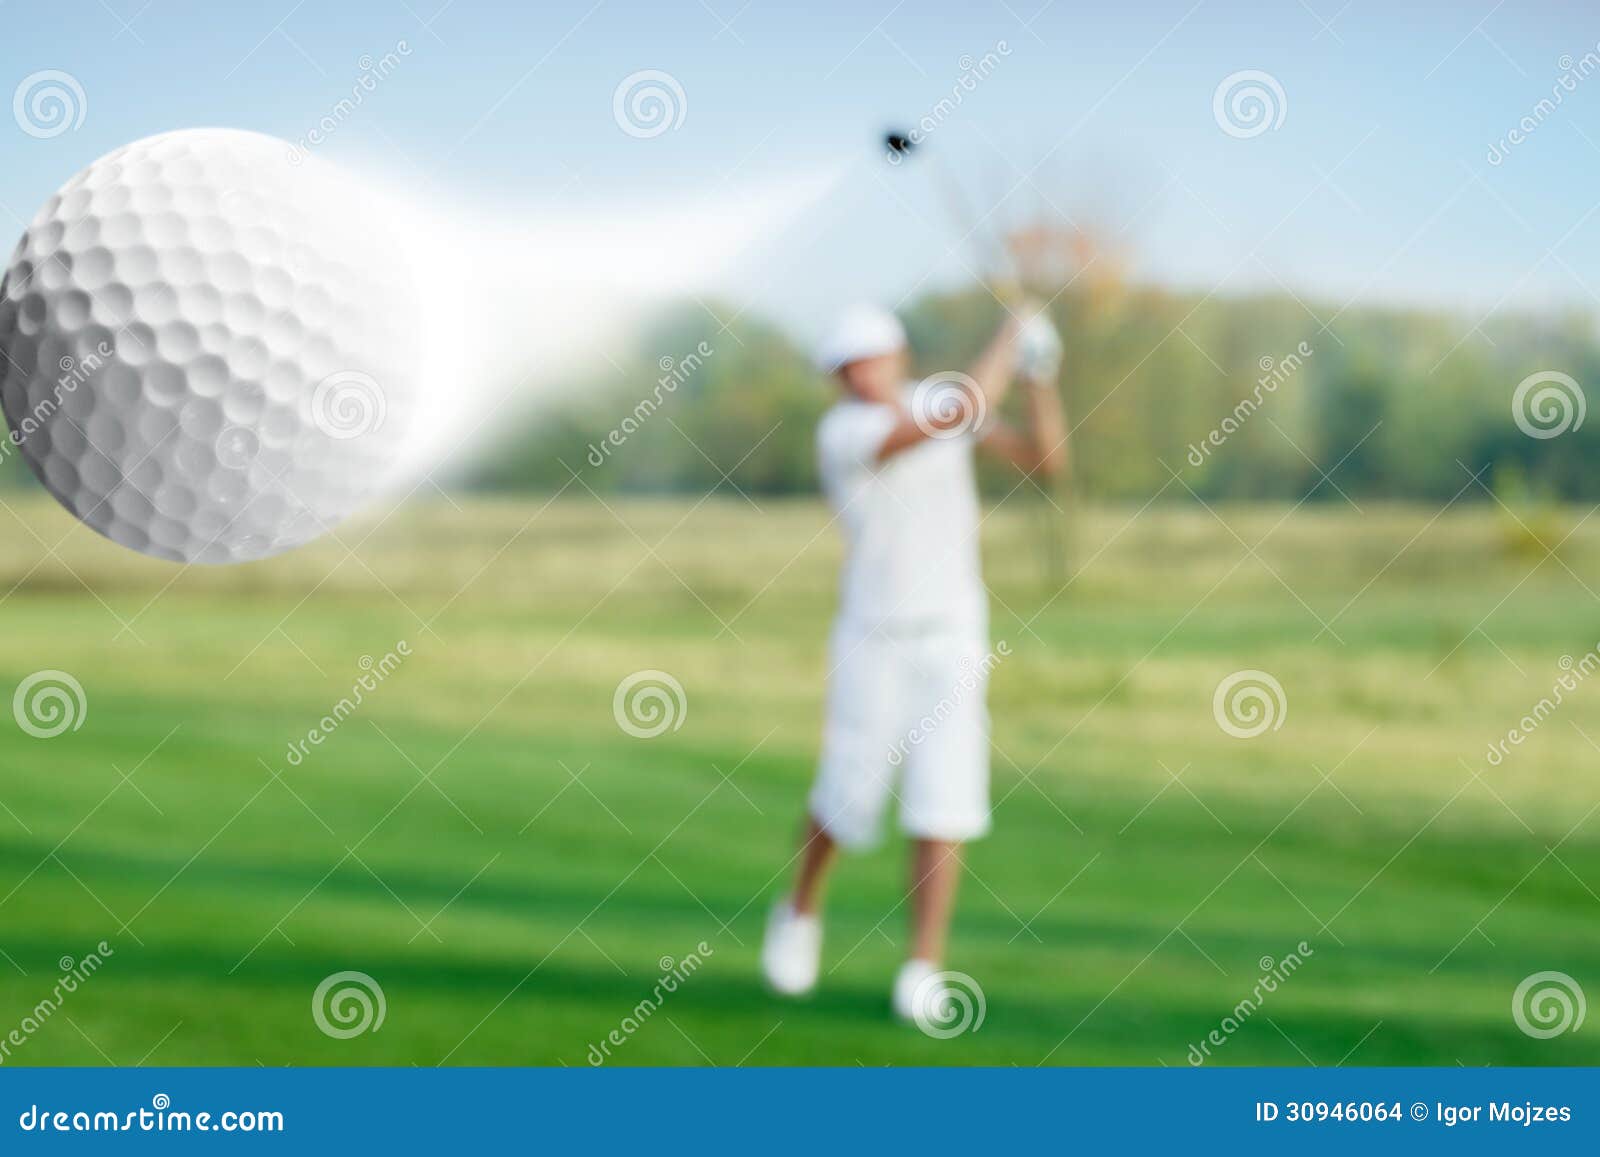 golfer and golf ball